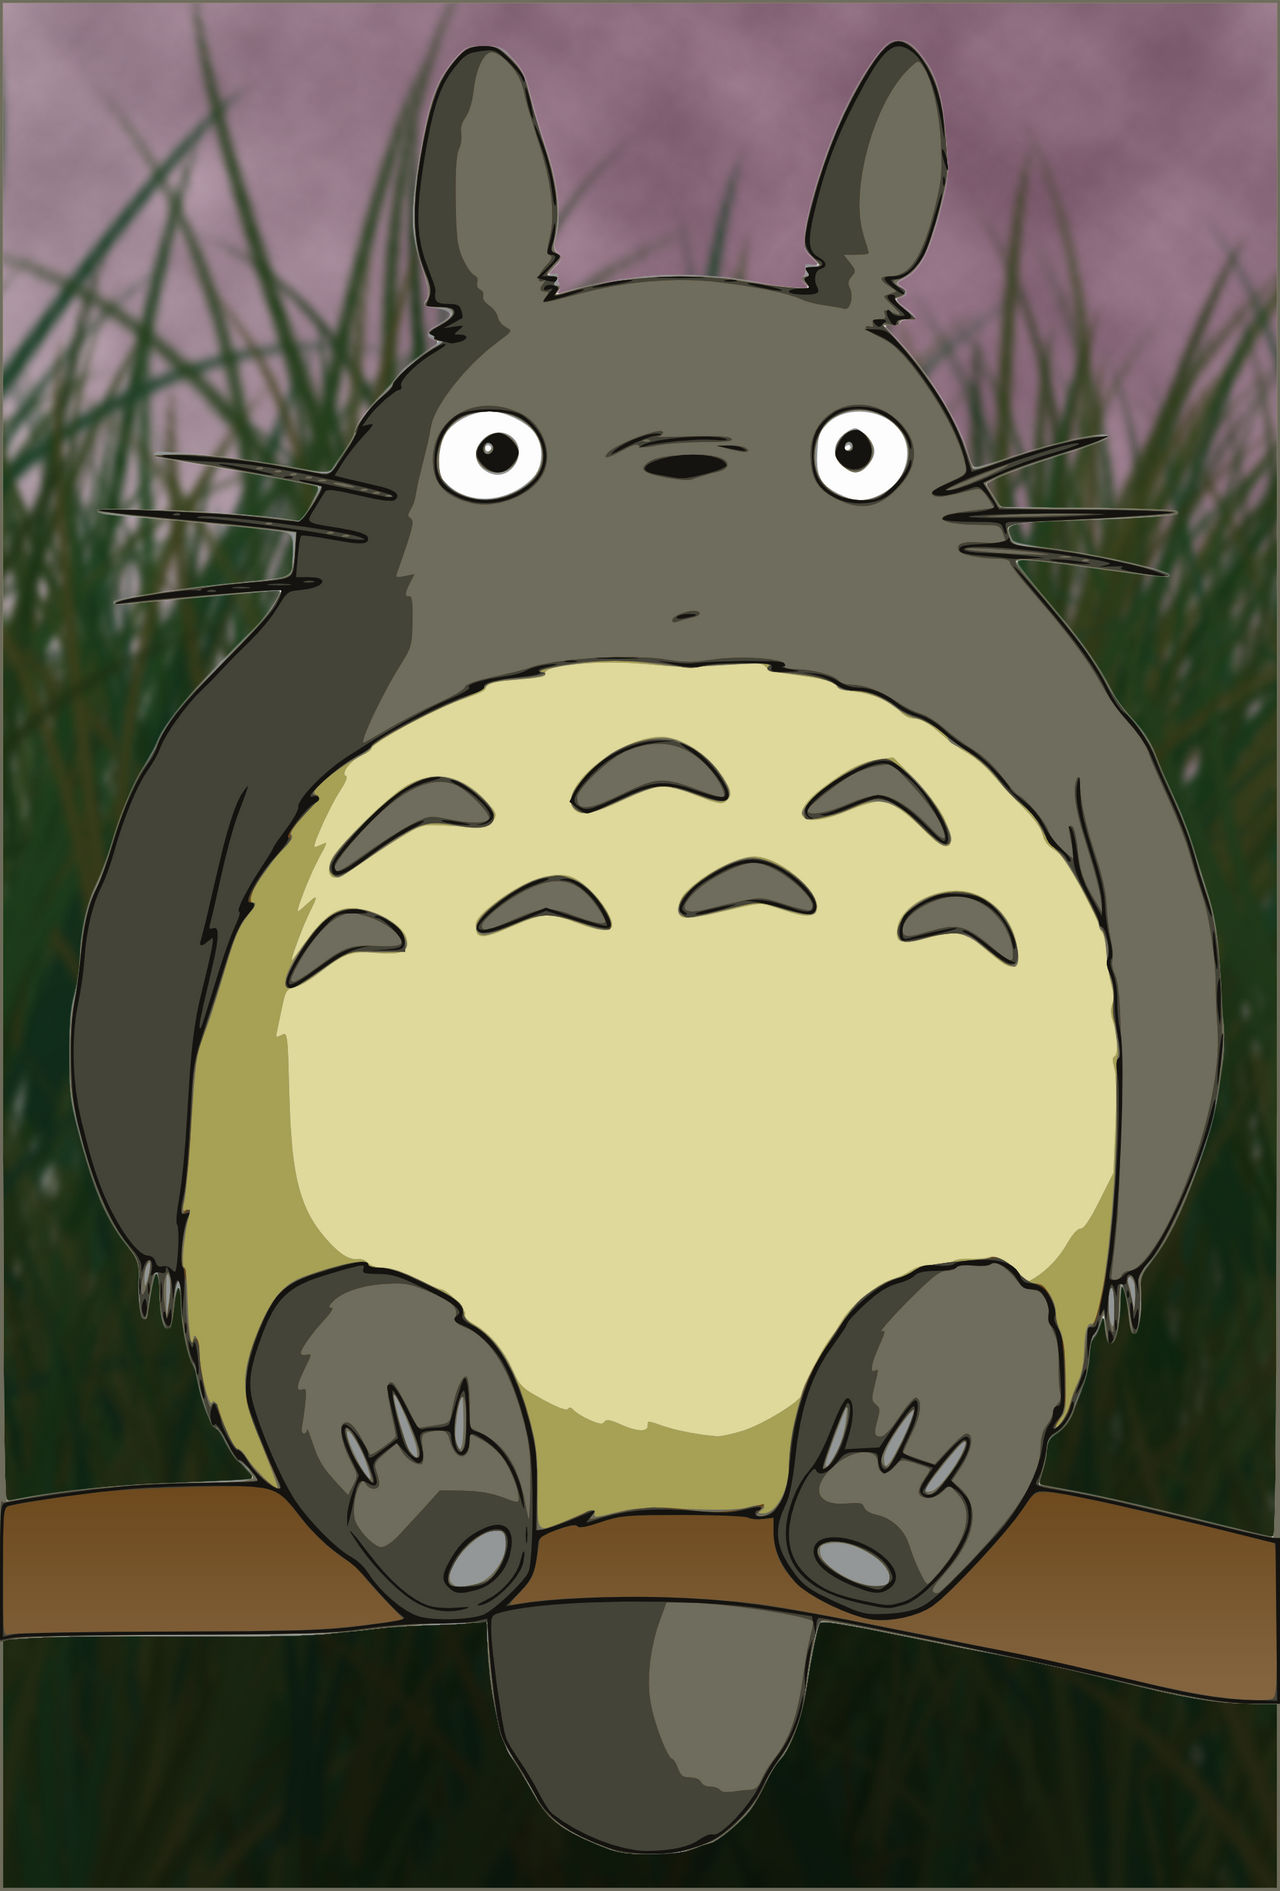 My Friend Totoro Wallpapers - Top Free My Friend Totoro Backgrounds ...